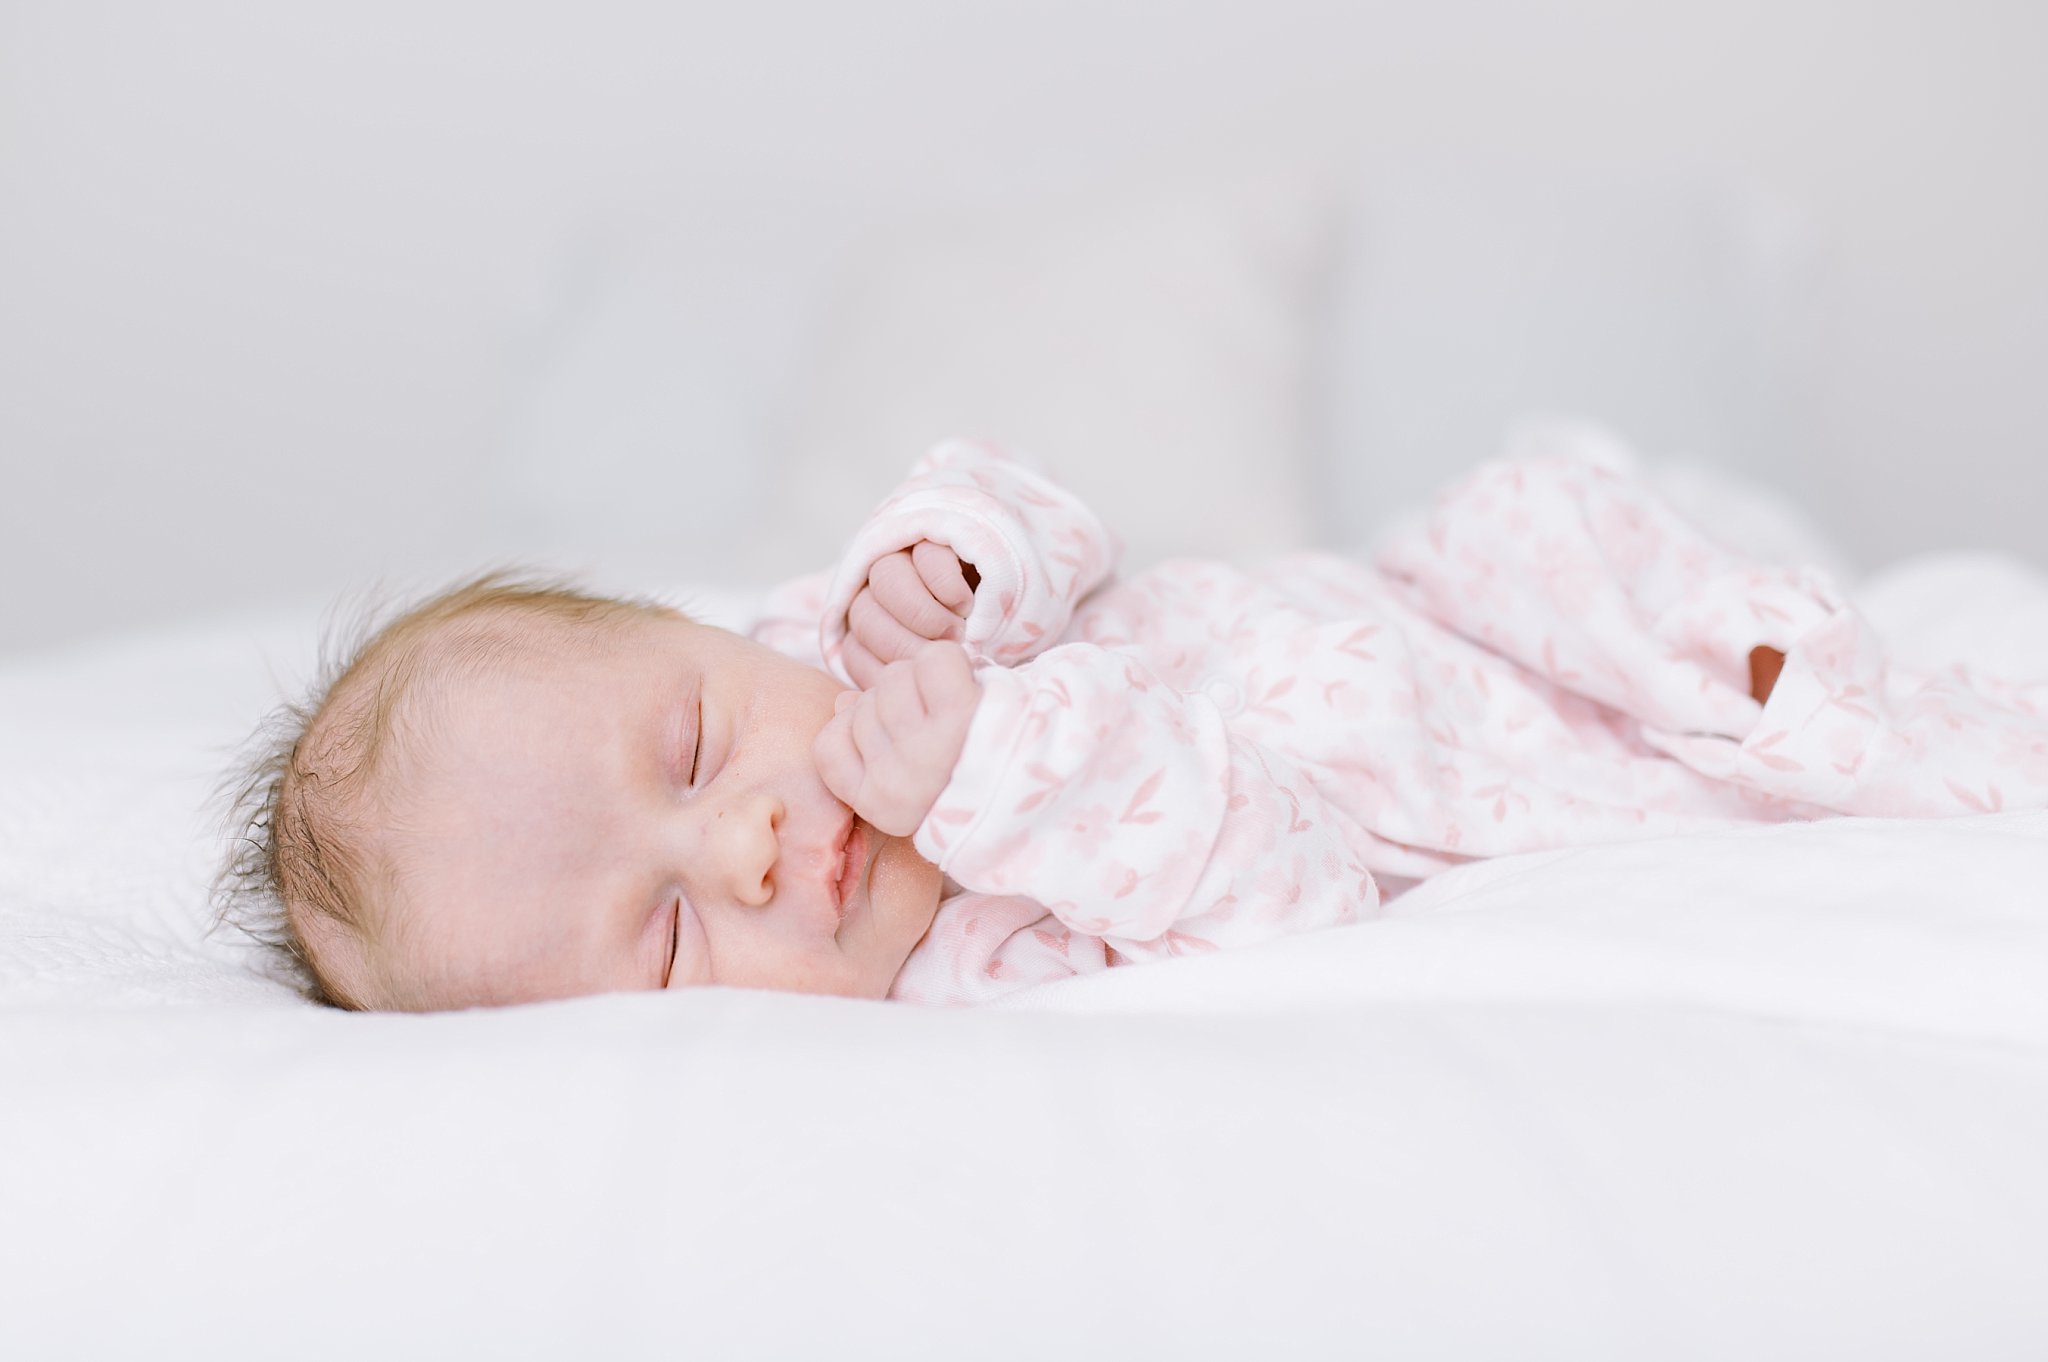 Newborn baby girl sleeps on her side wearing pink pajamas while laying on white bedding.